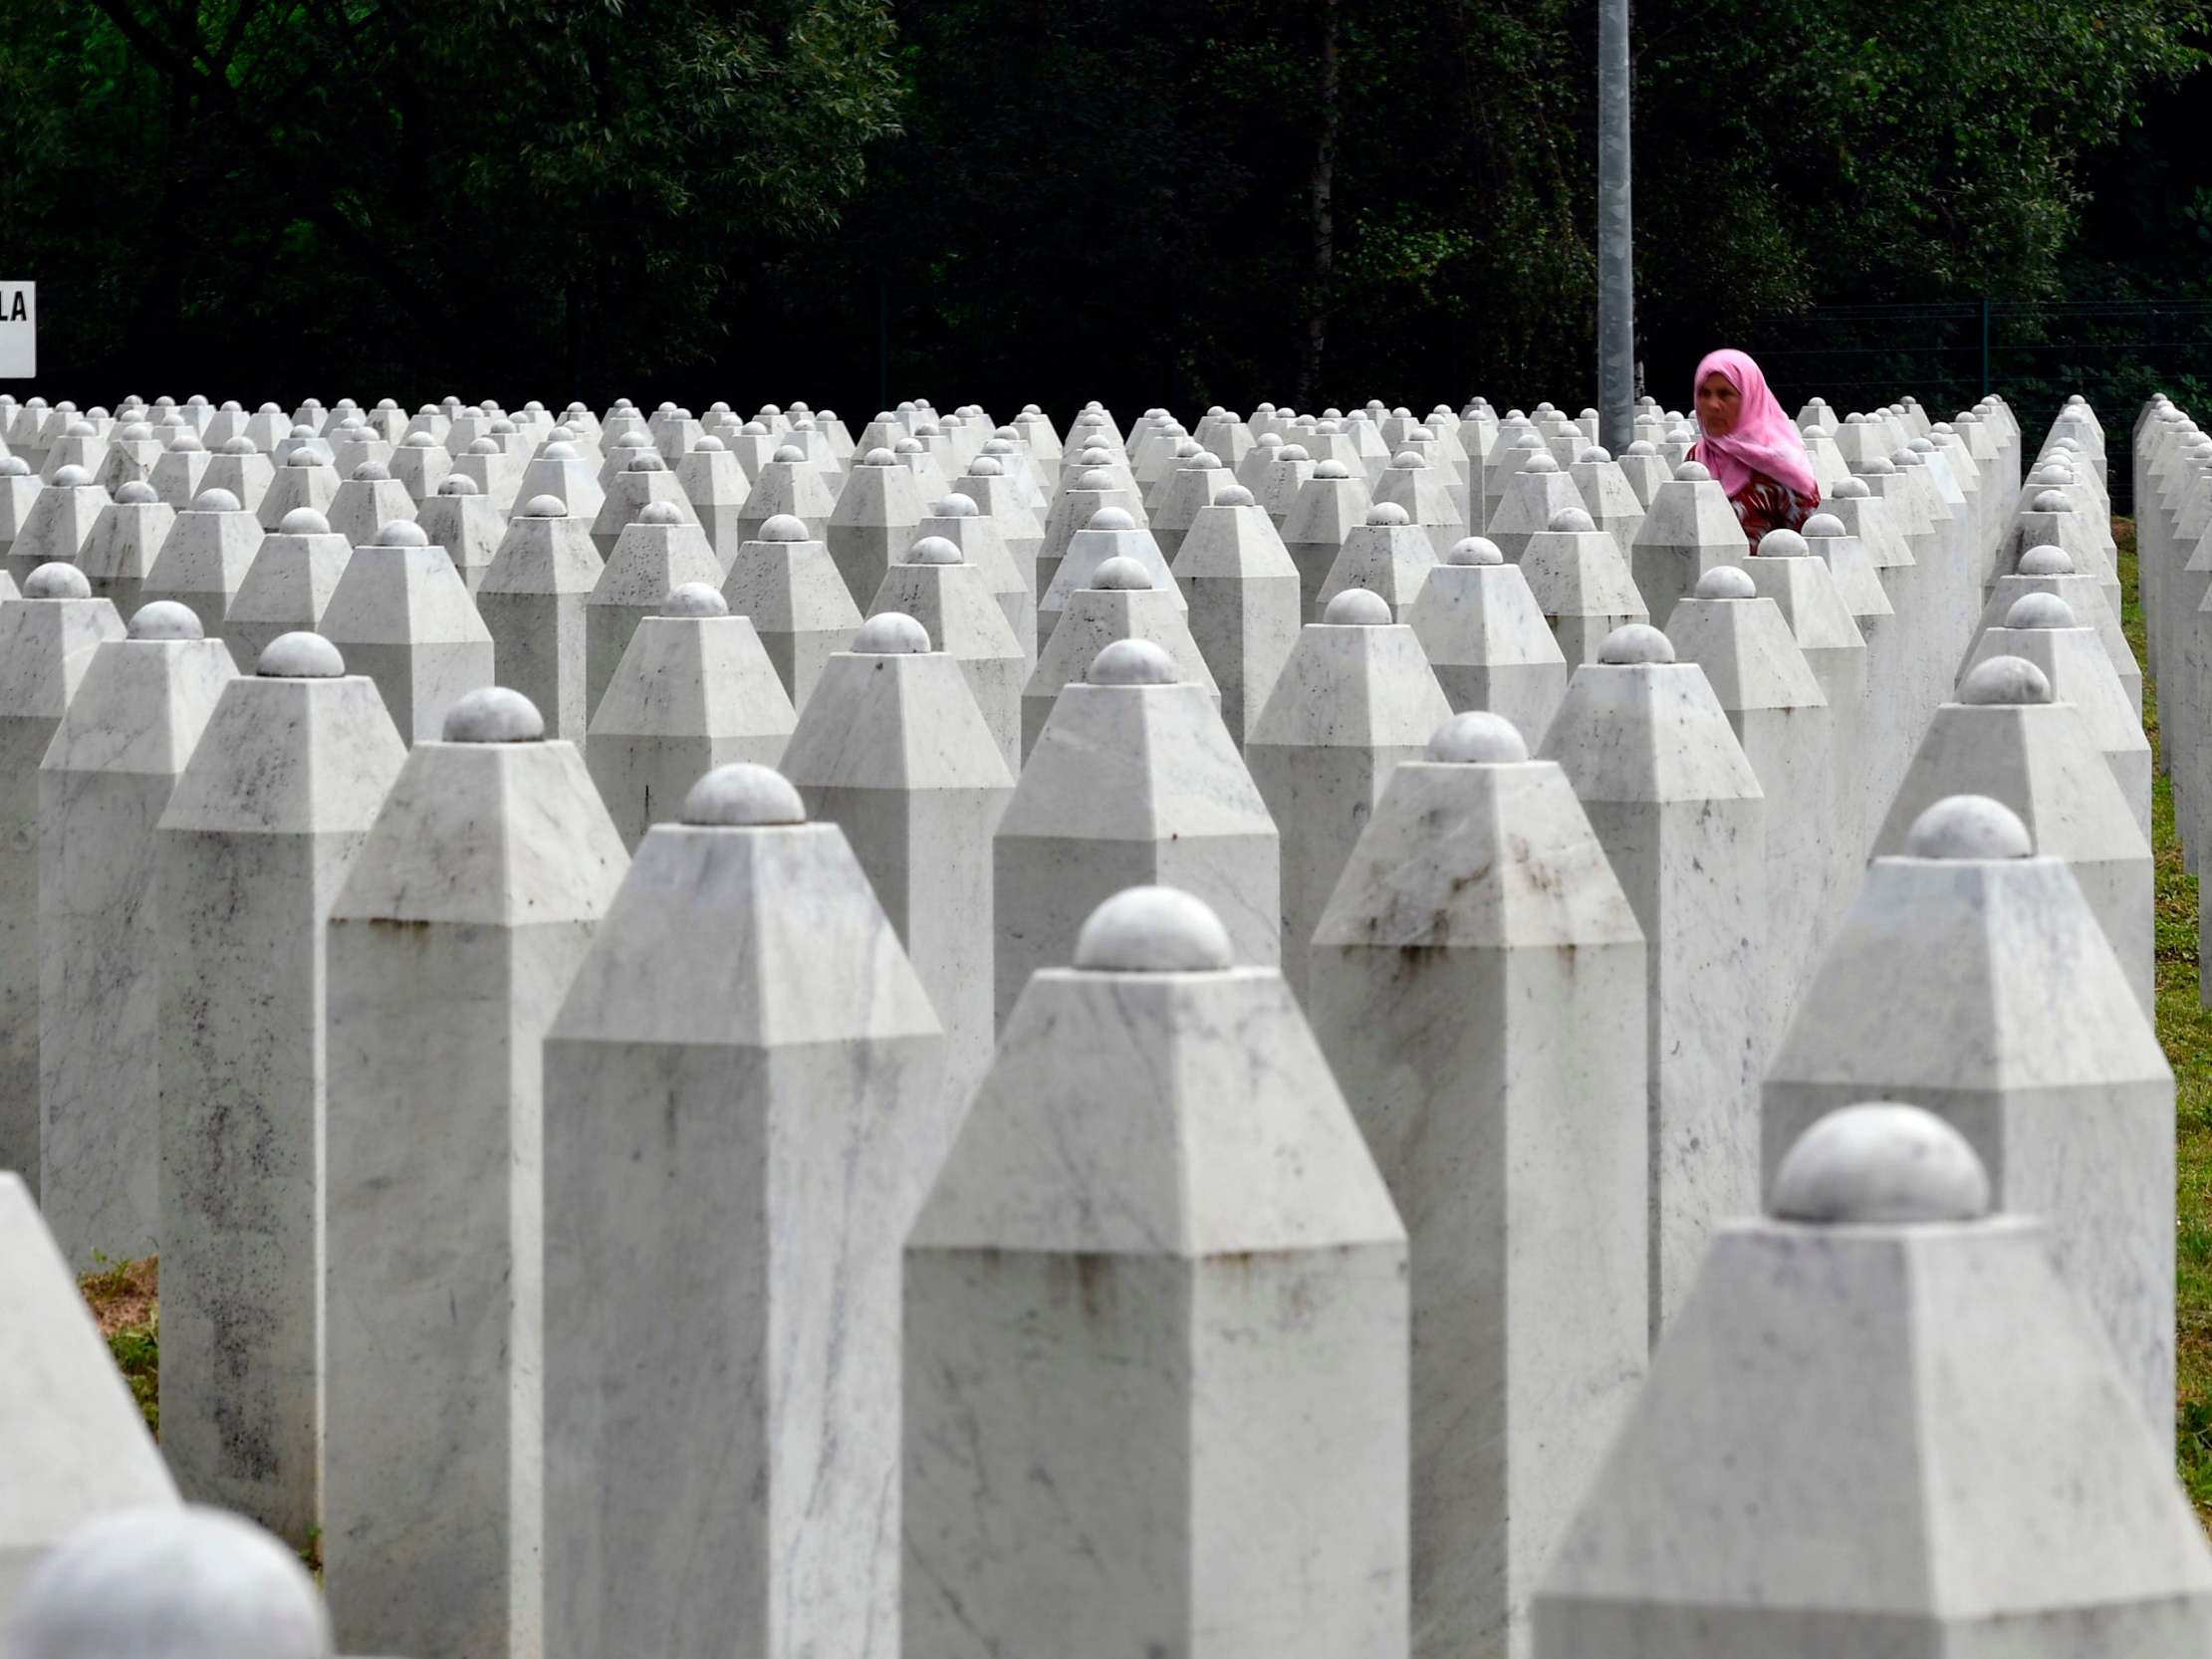 Today marks the 25th anniversary of the Srebrenica massacre.